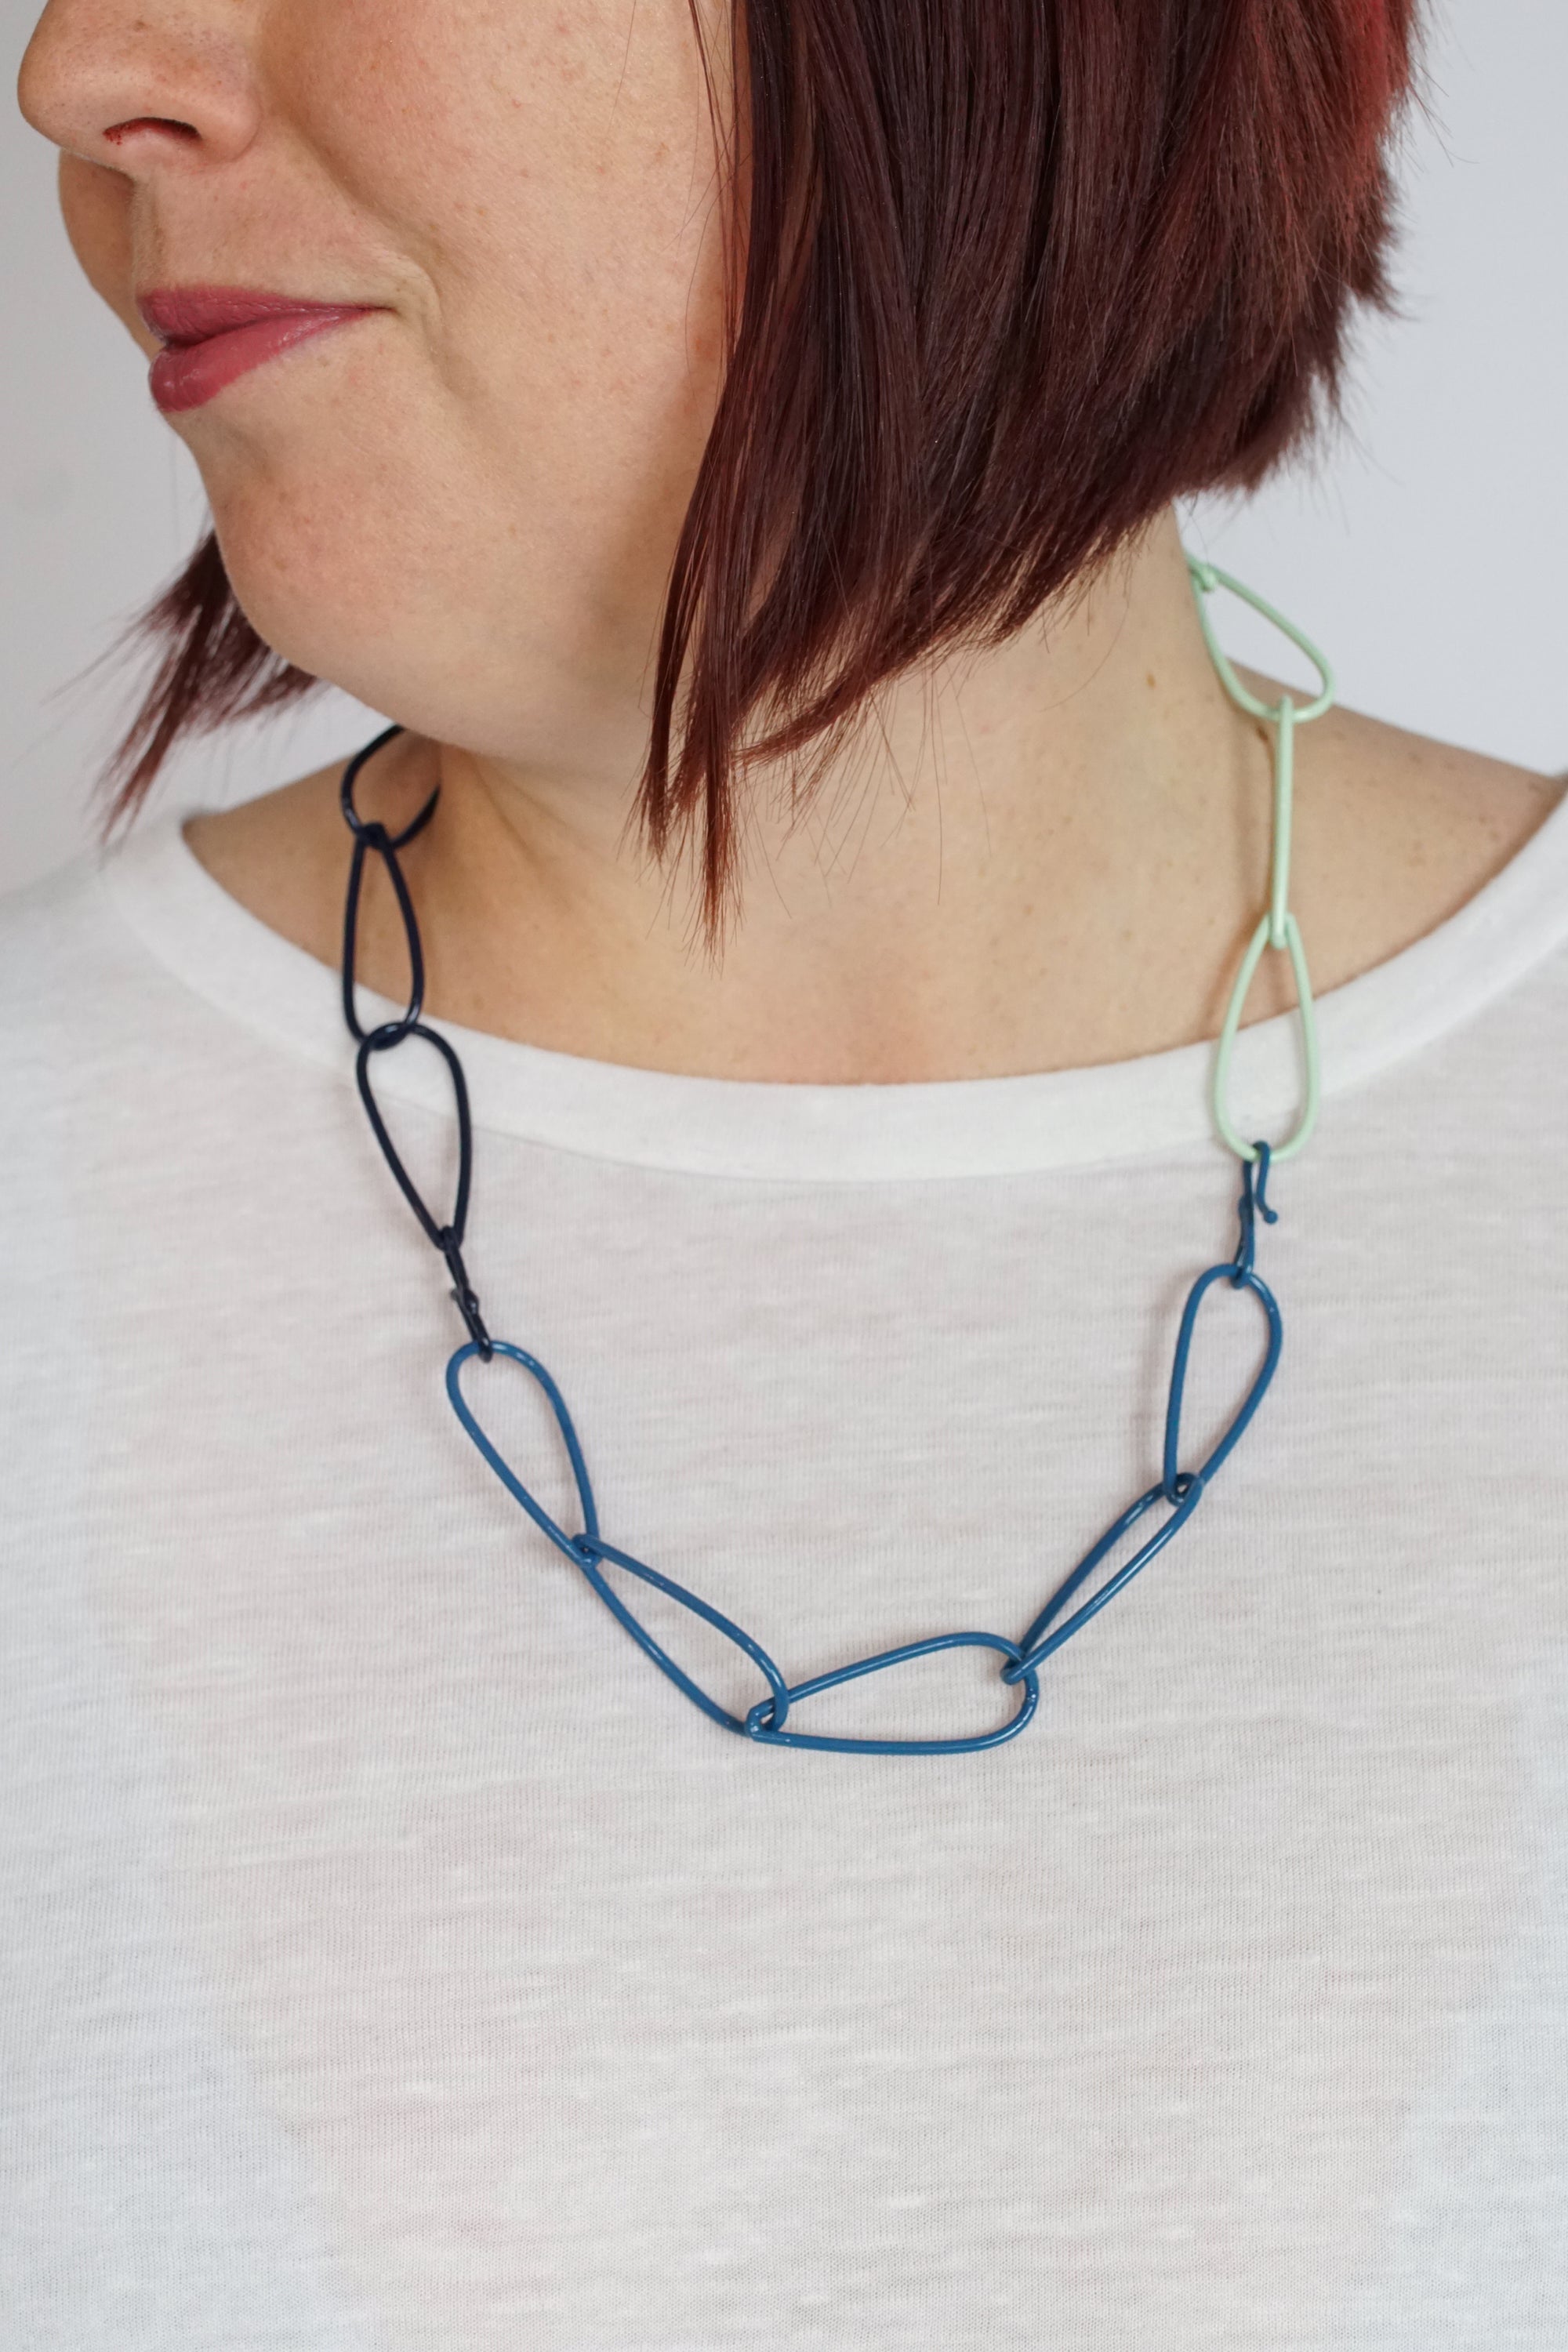 Modular Necklace in Azure Blue, Dark Navy, and Soft Mint